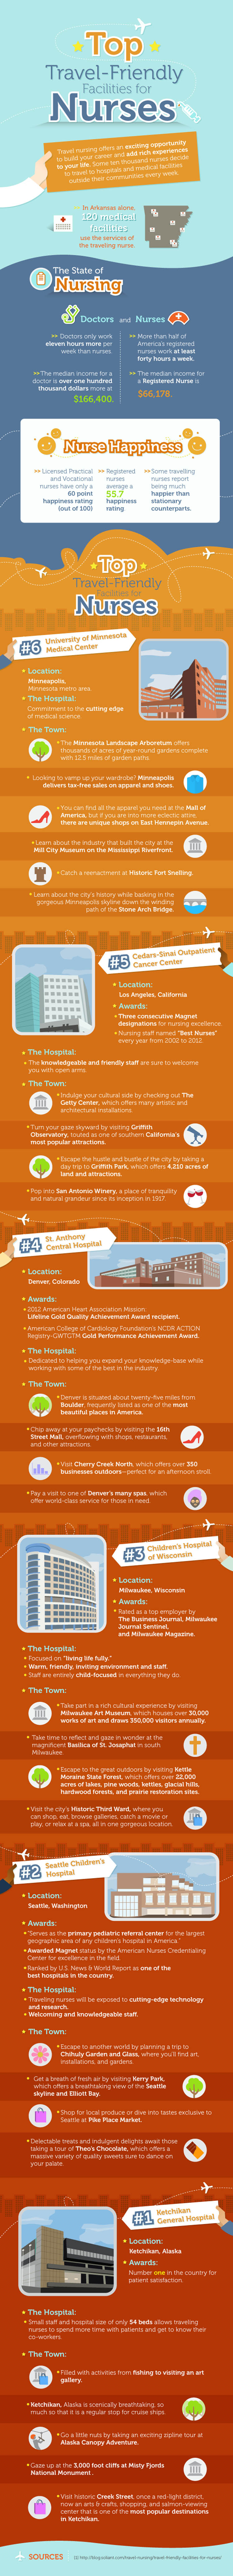 Top Travel Friendly Facilities For Nurses